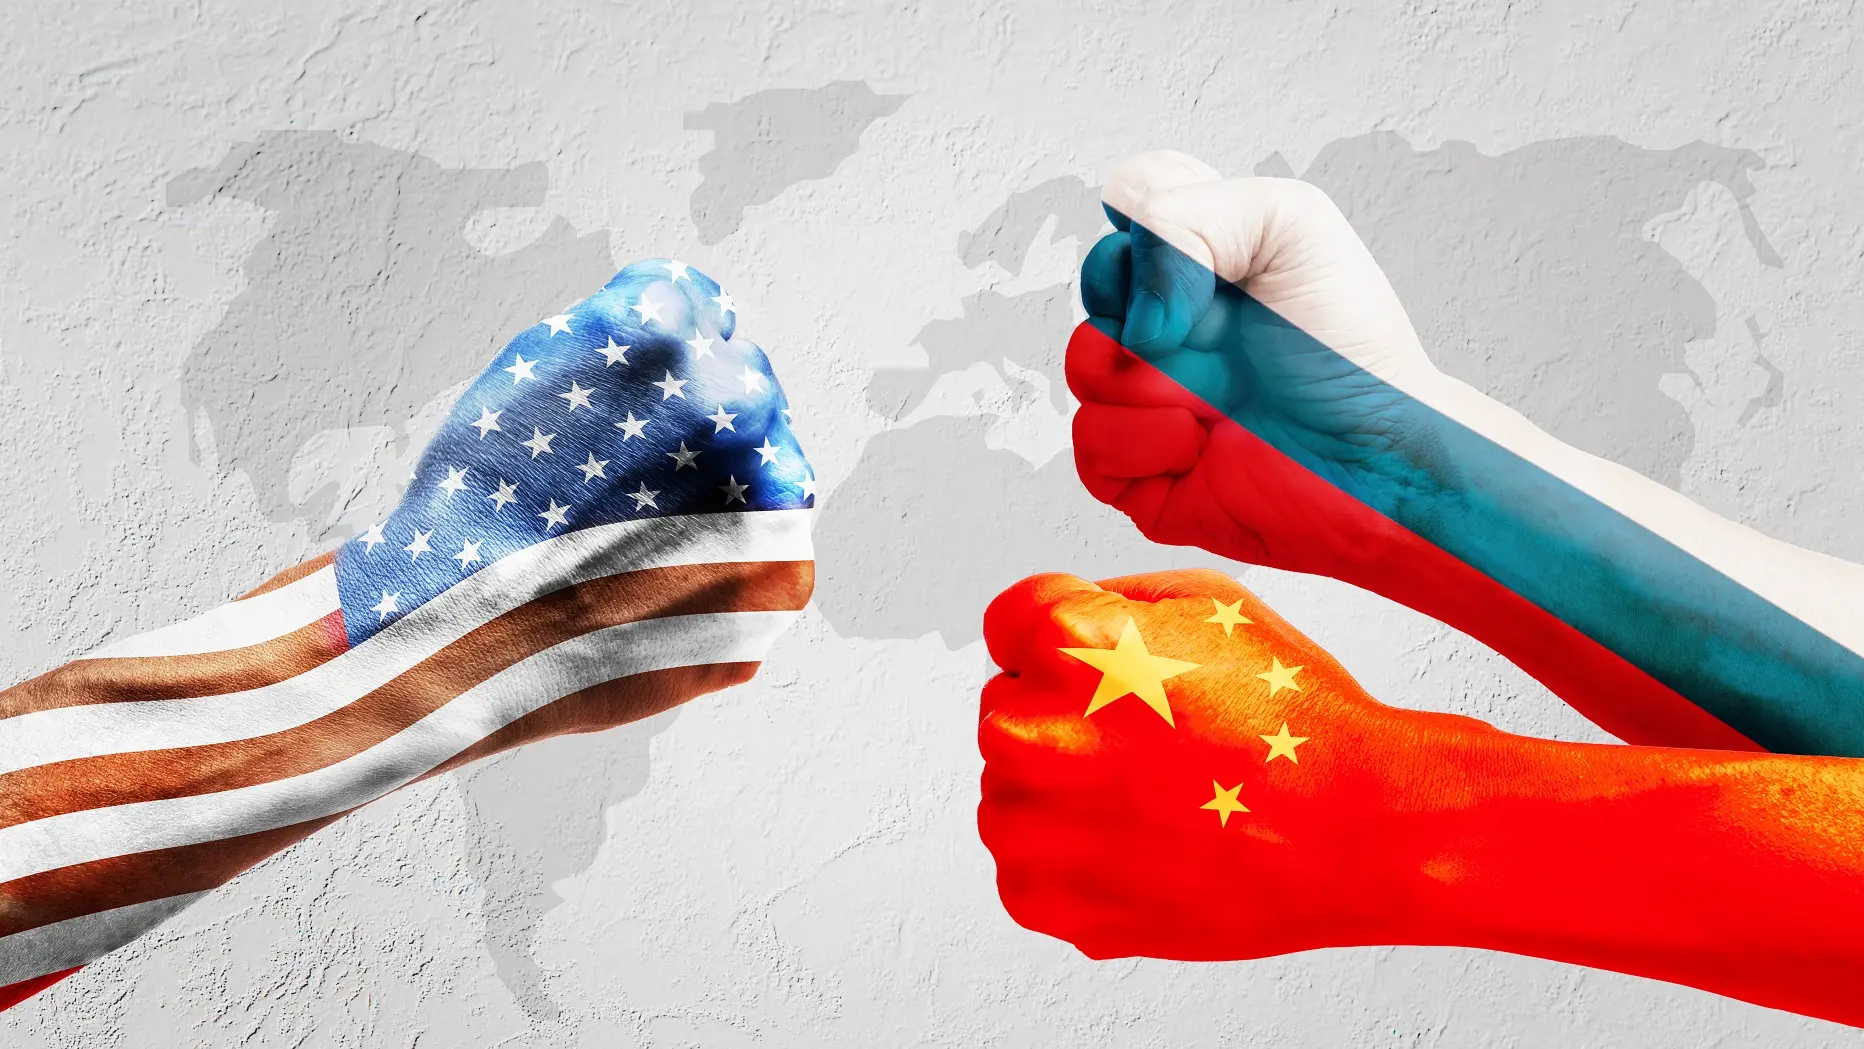 kina, rusija, sad, kineska, ruska, američka zastava svetska ekonomija, ekonomski odnosi, dedolarizacija - shutterstock-662778c8b28d1.webp